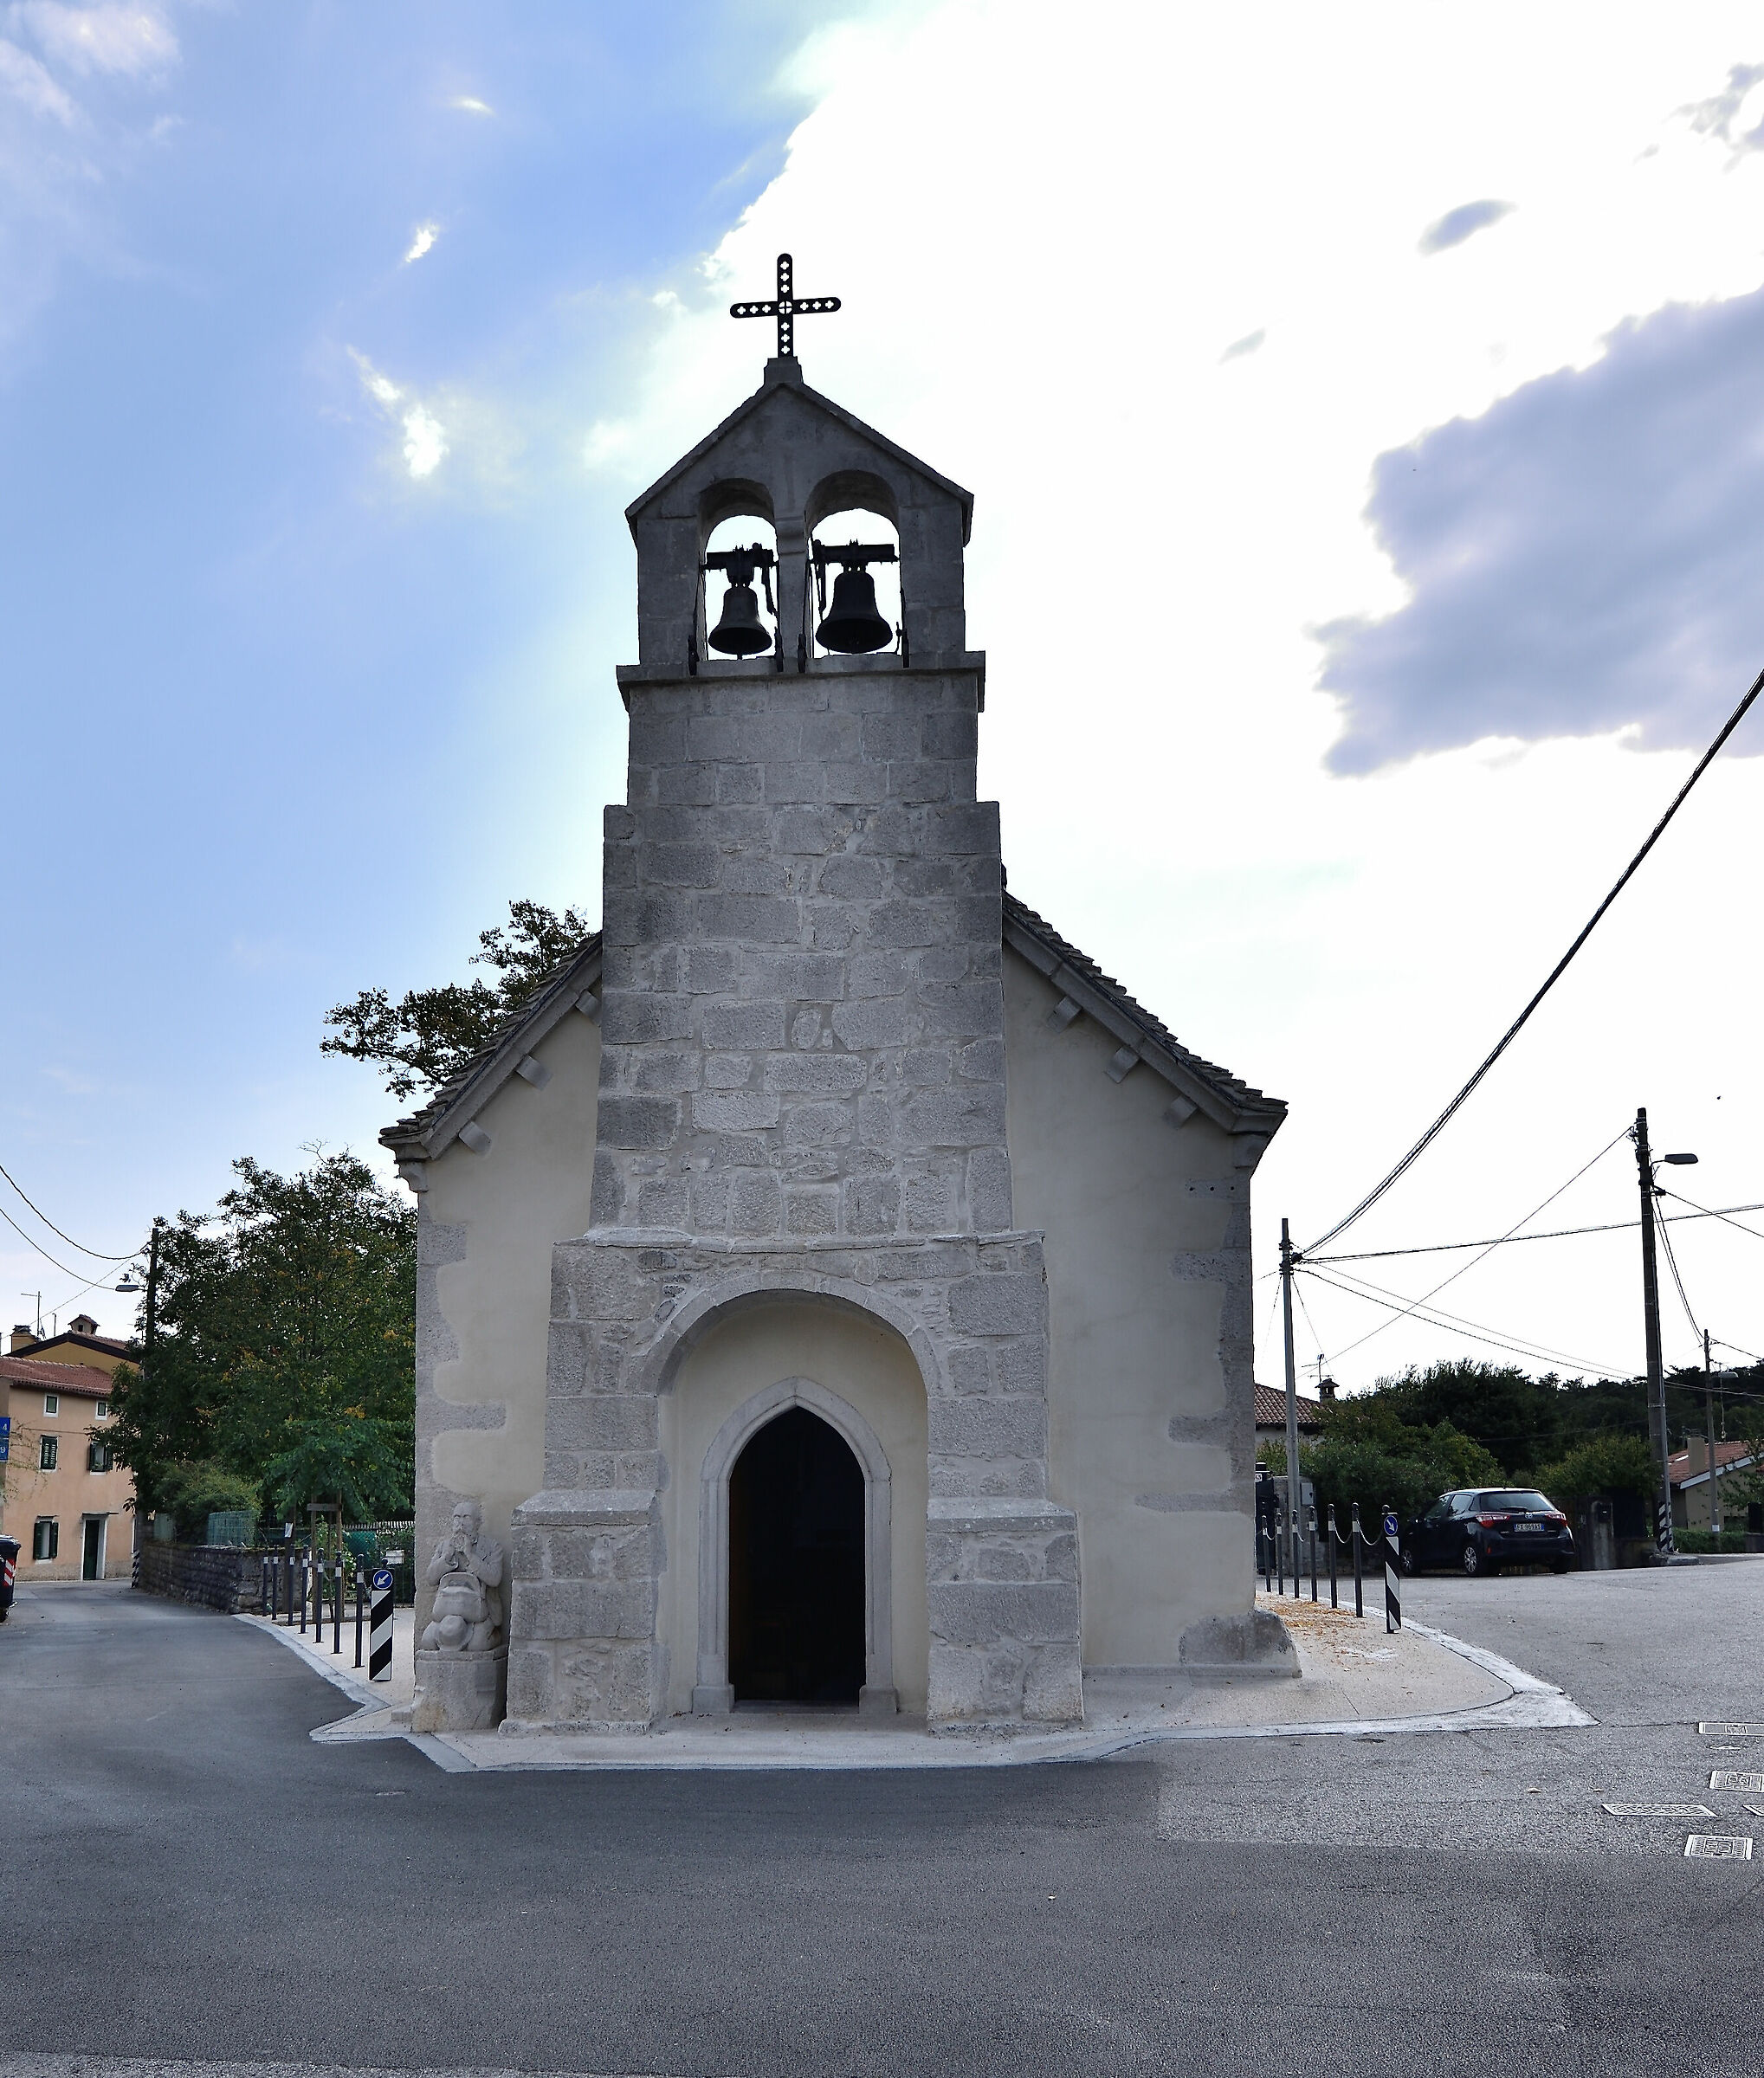 Facade of the Church of St. Cross-Kriz...